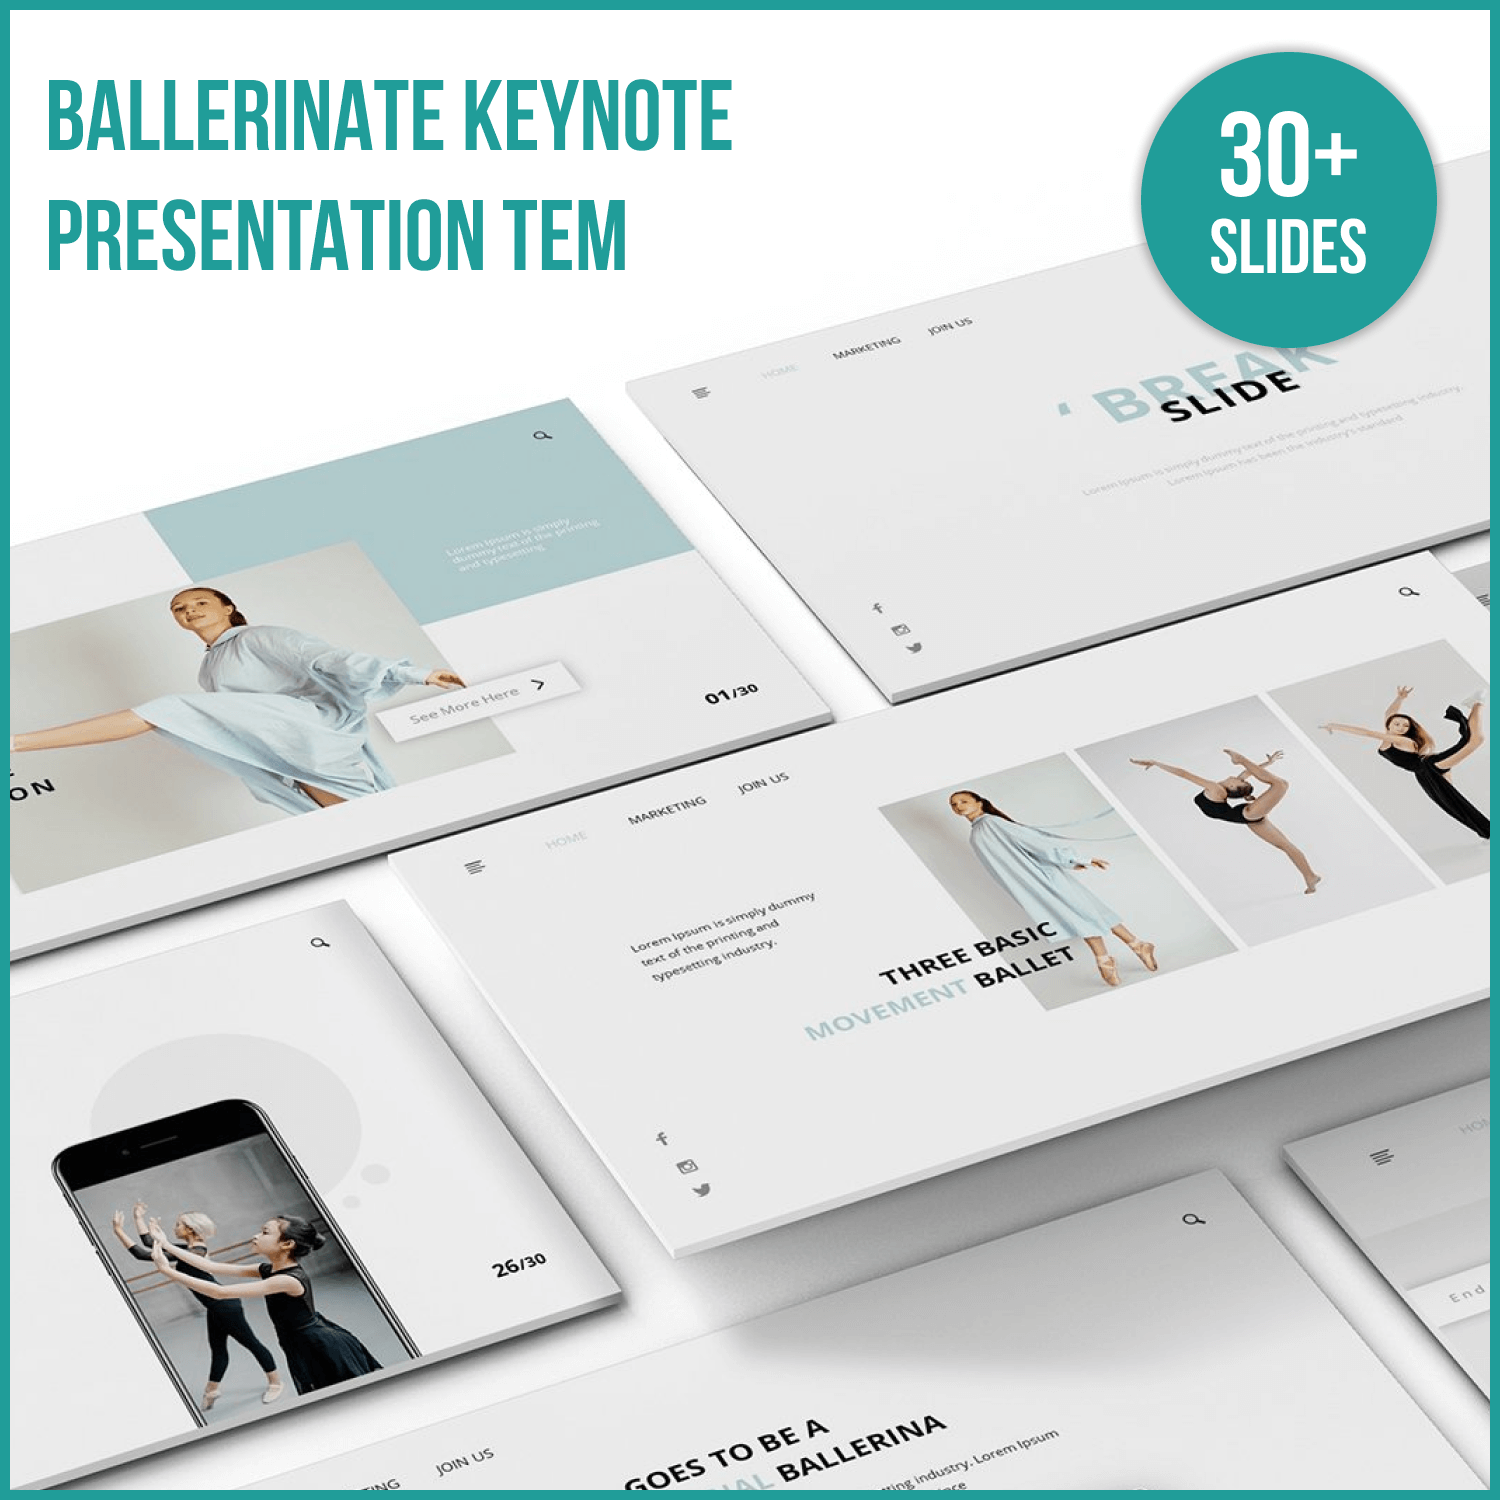 Ballerinate keynote presentation.